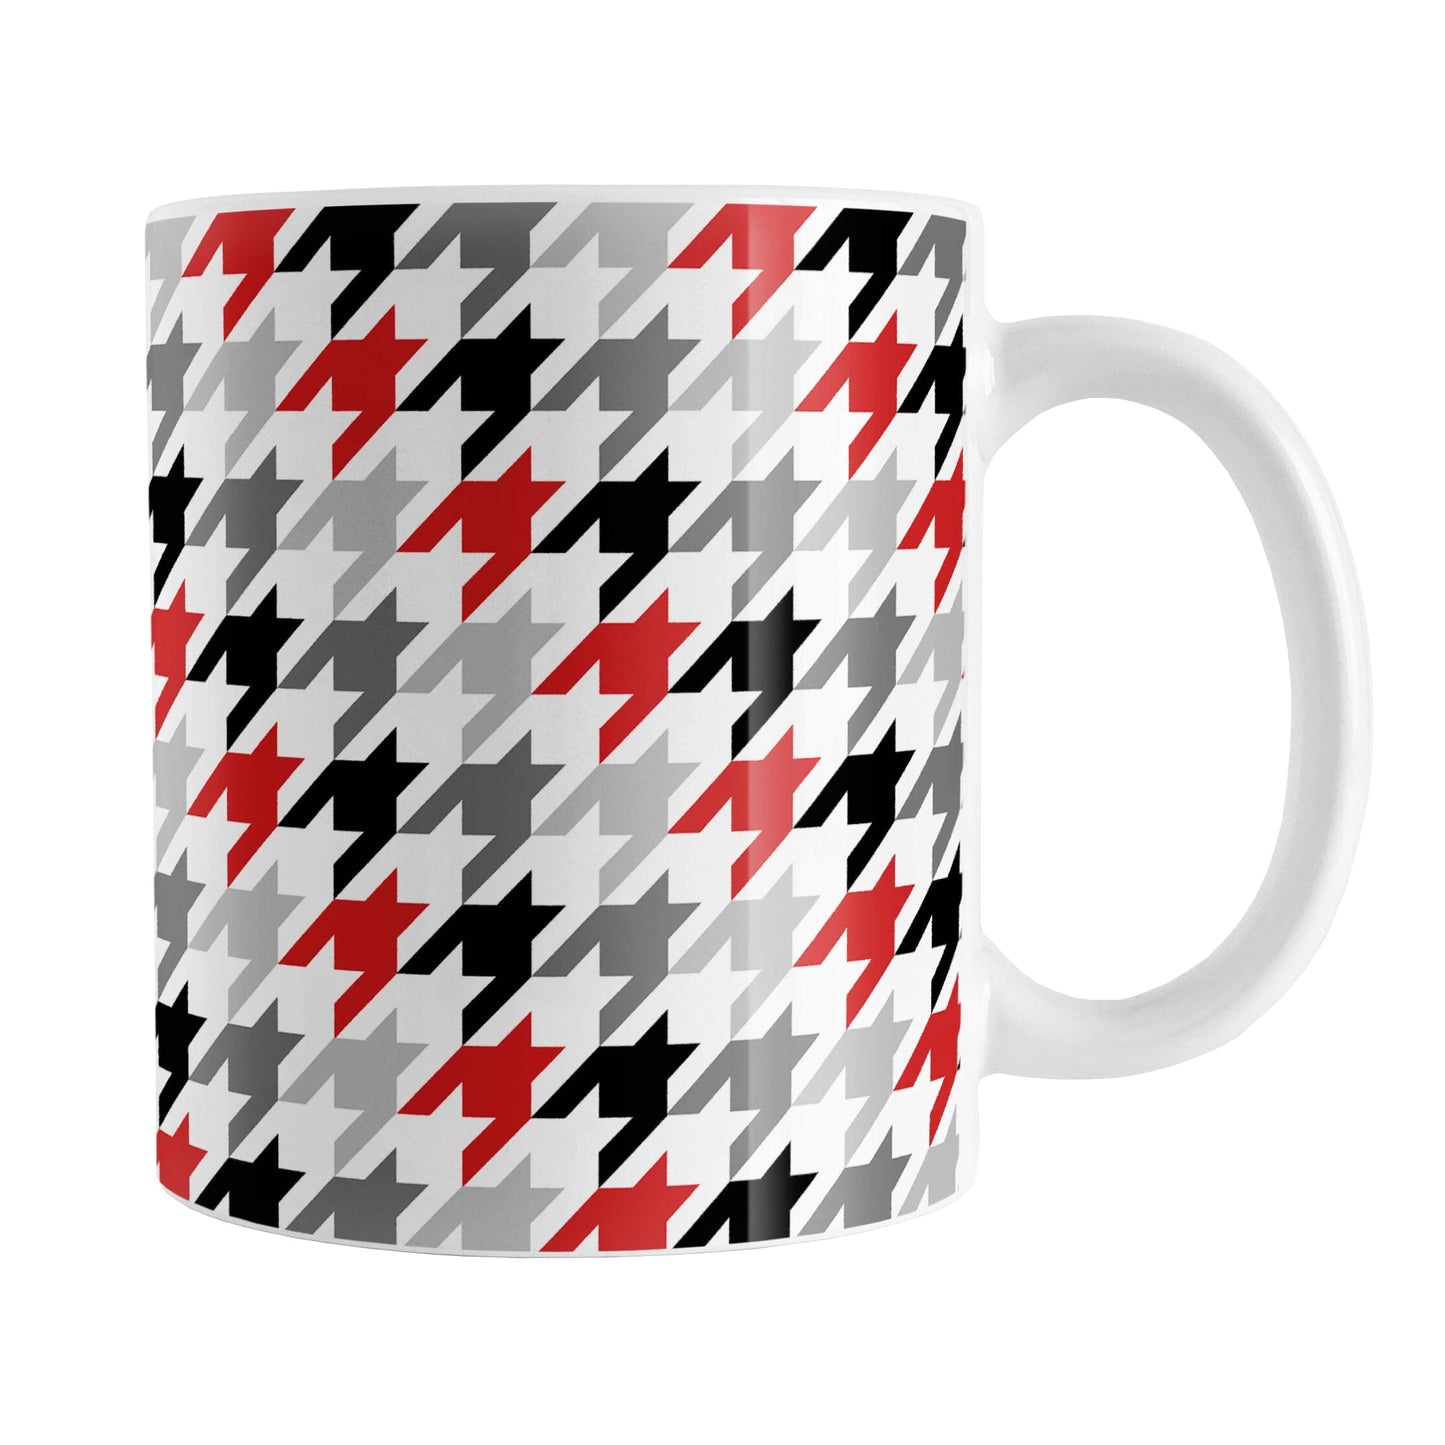 Black Gray Red Houndstooth Mug (11oz) at Amy's Coffee Mugs. A ceramic coffee mug designed with a houndstooth or dogtooth pattern in a black, gray, and red color progression that wraps around the mug to the handle.